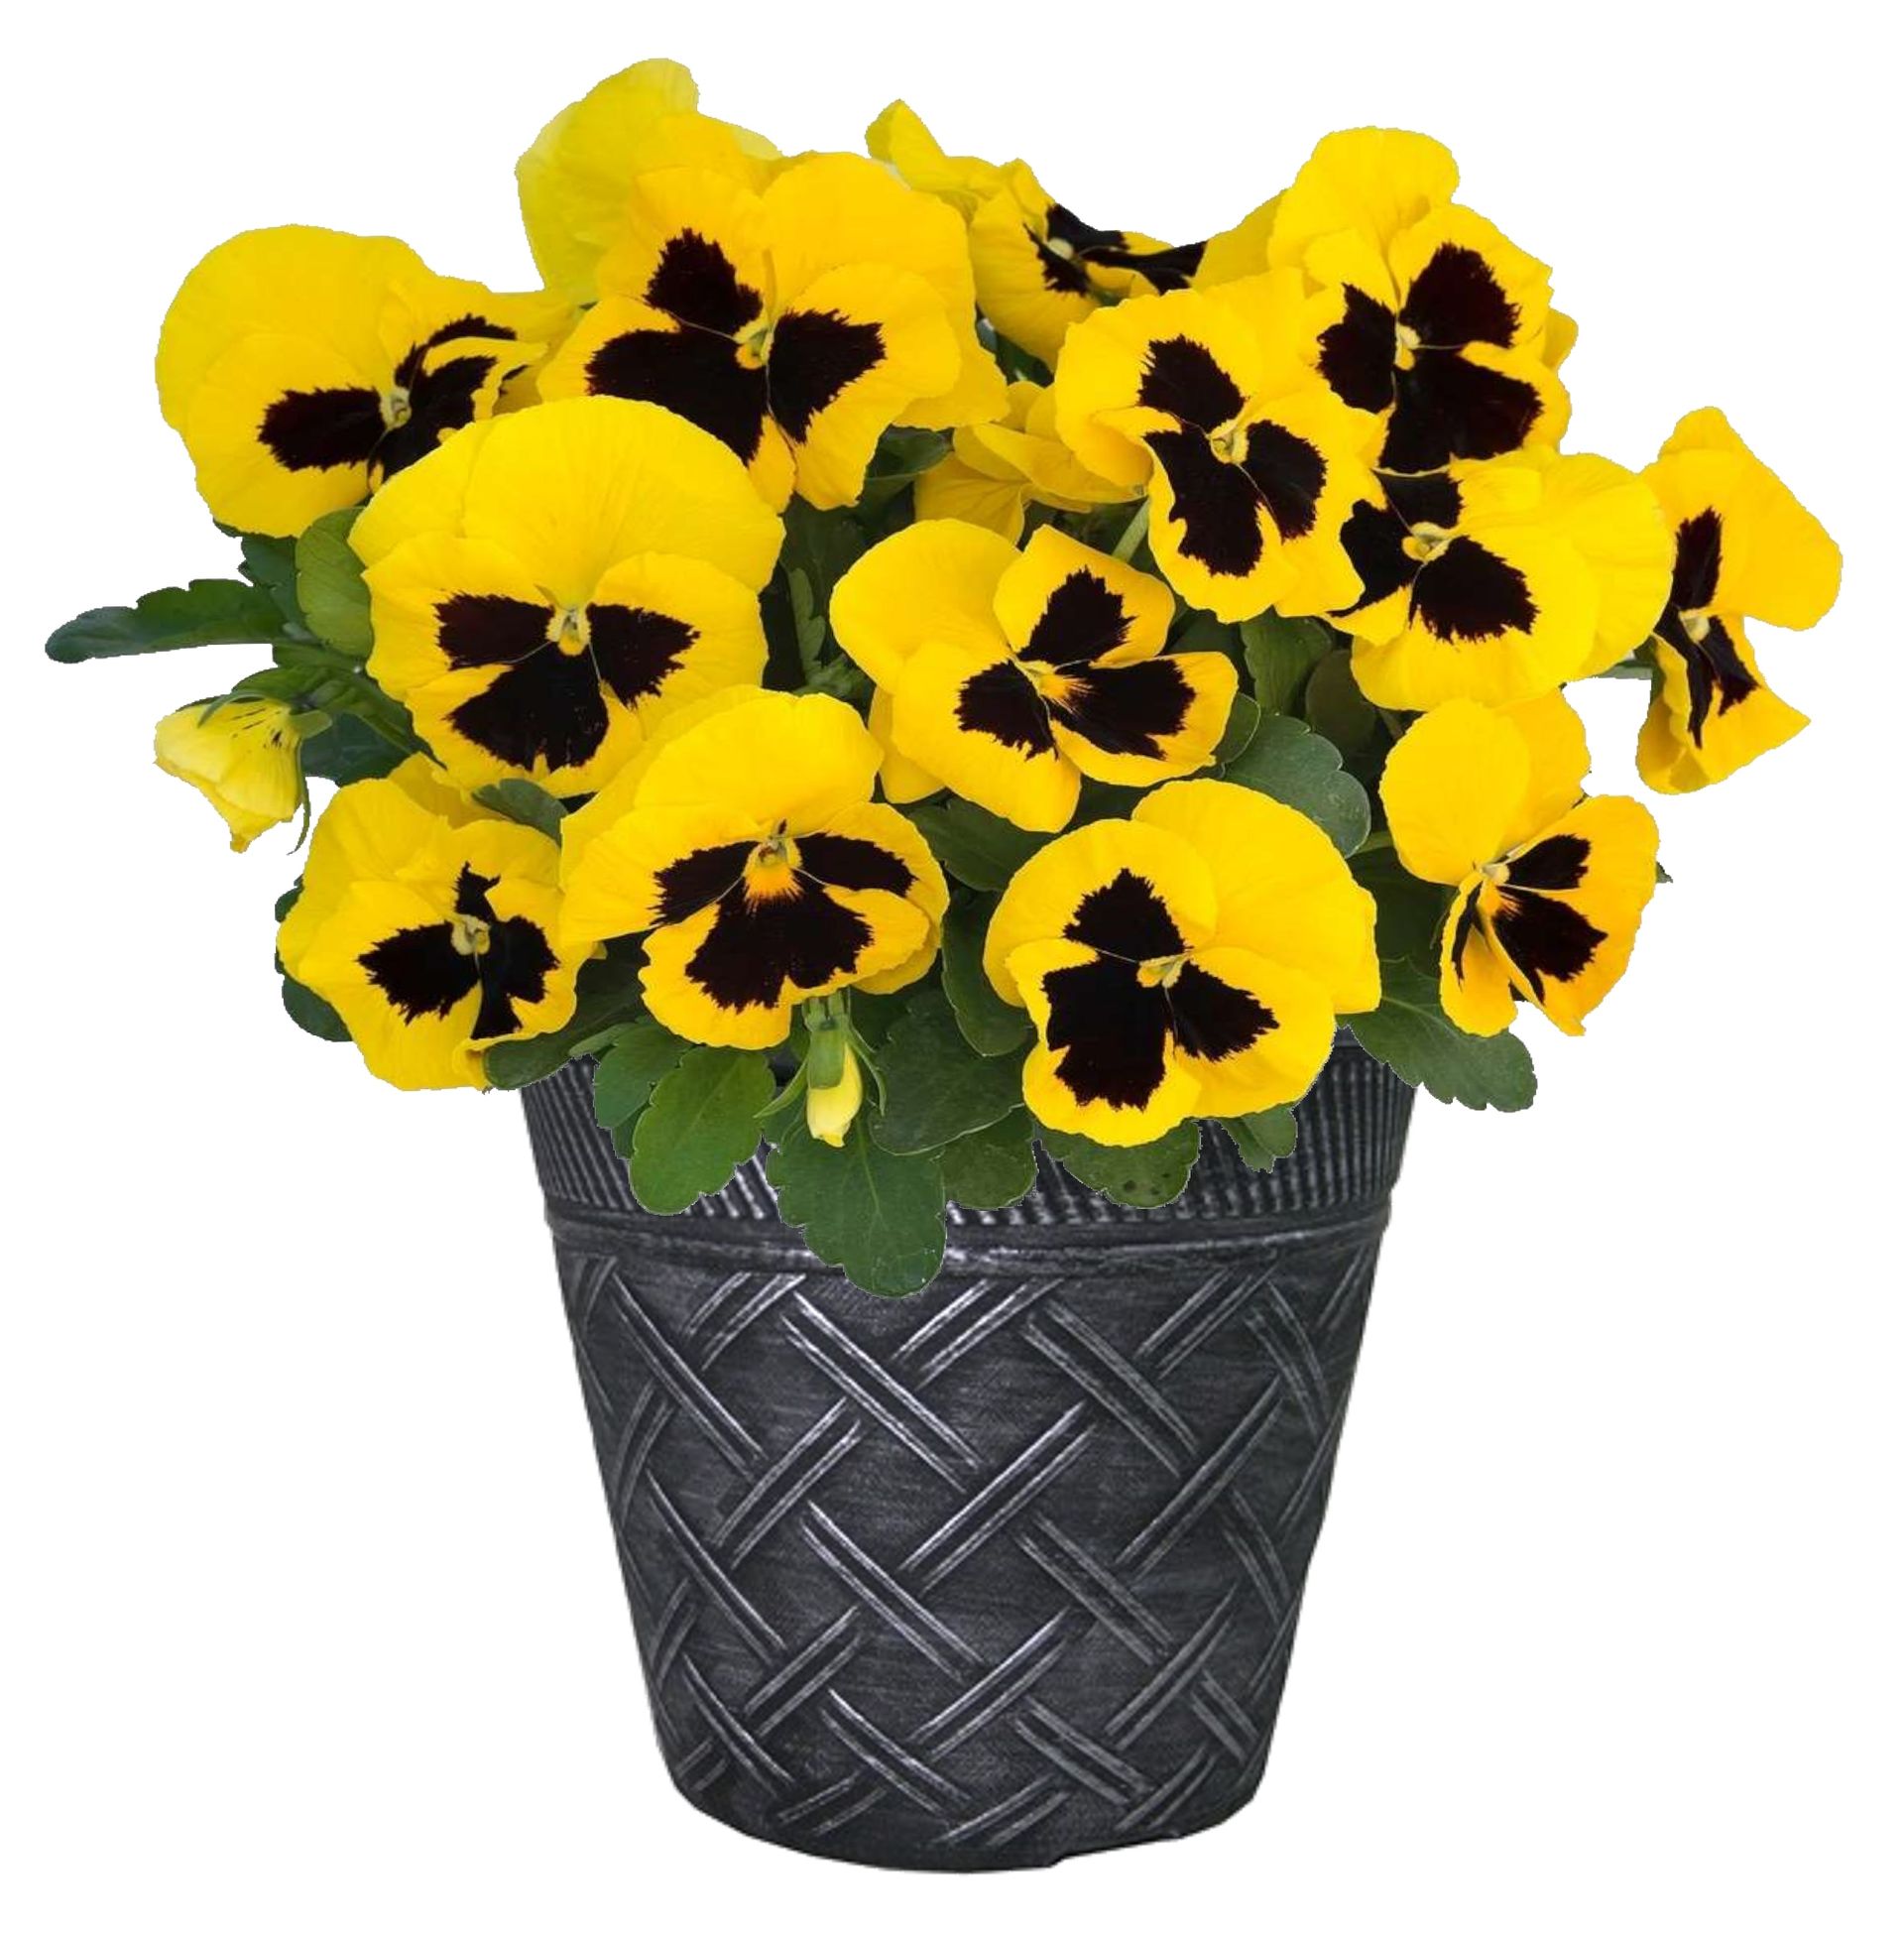 Pansy Freefall XL Yellow Blotch  Flower for sale in Lebanon PA